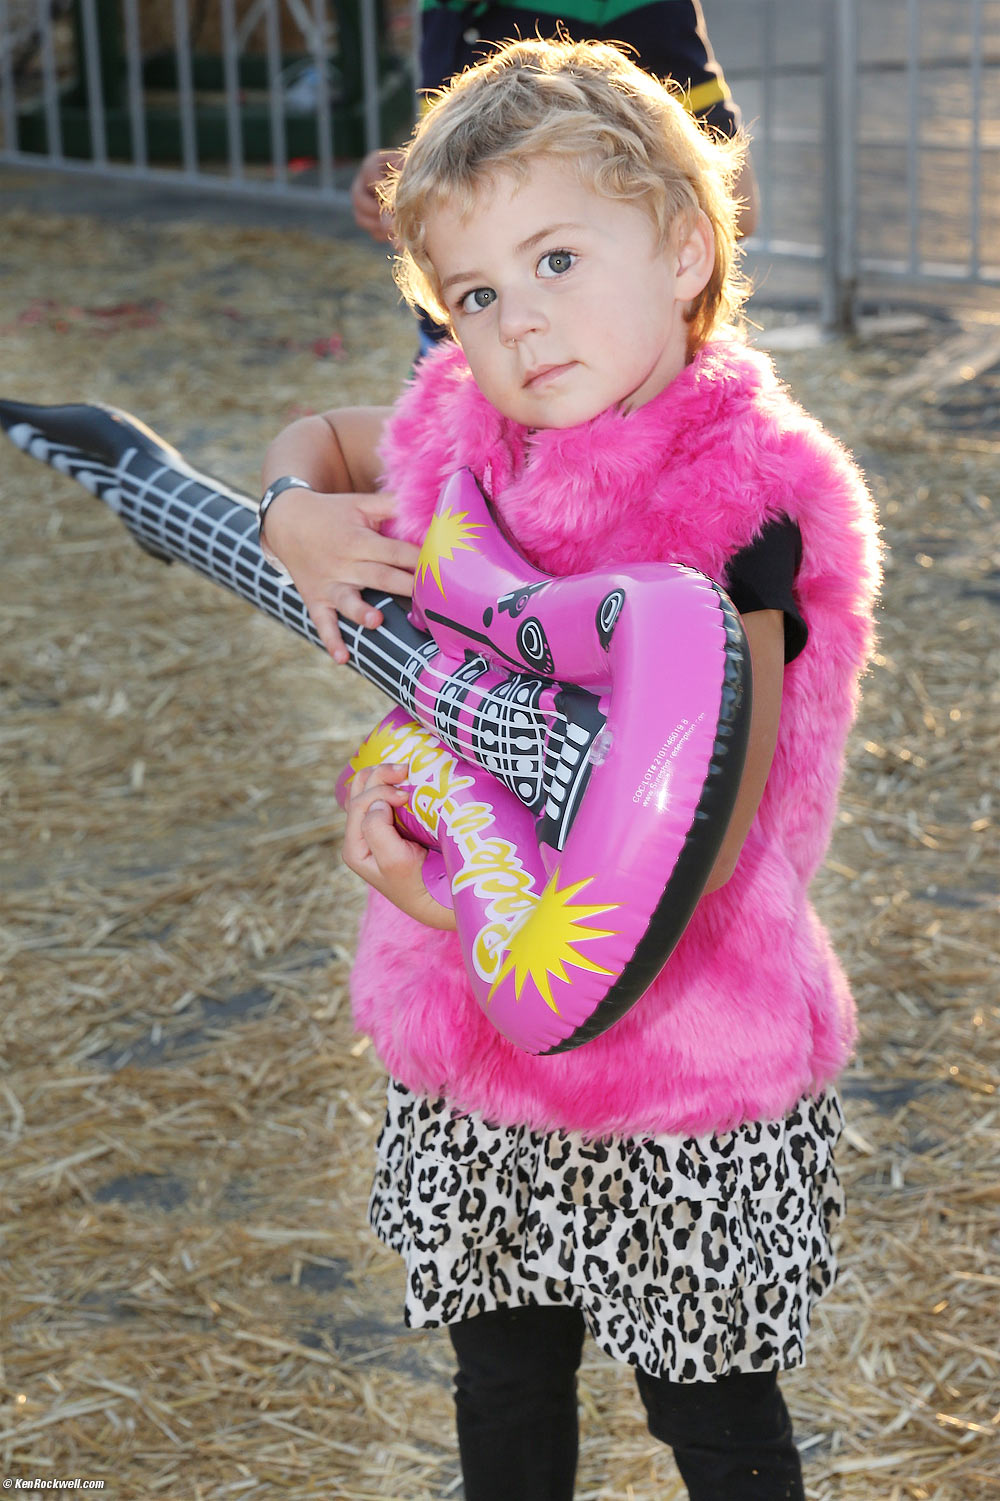 Katie scores a pink guitar